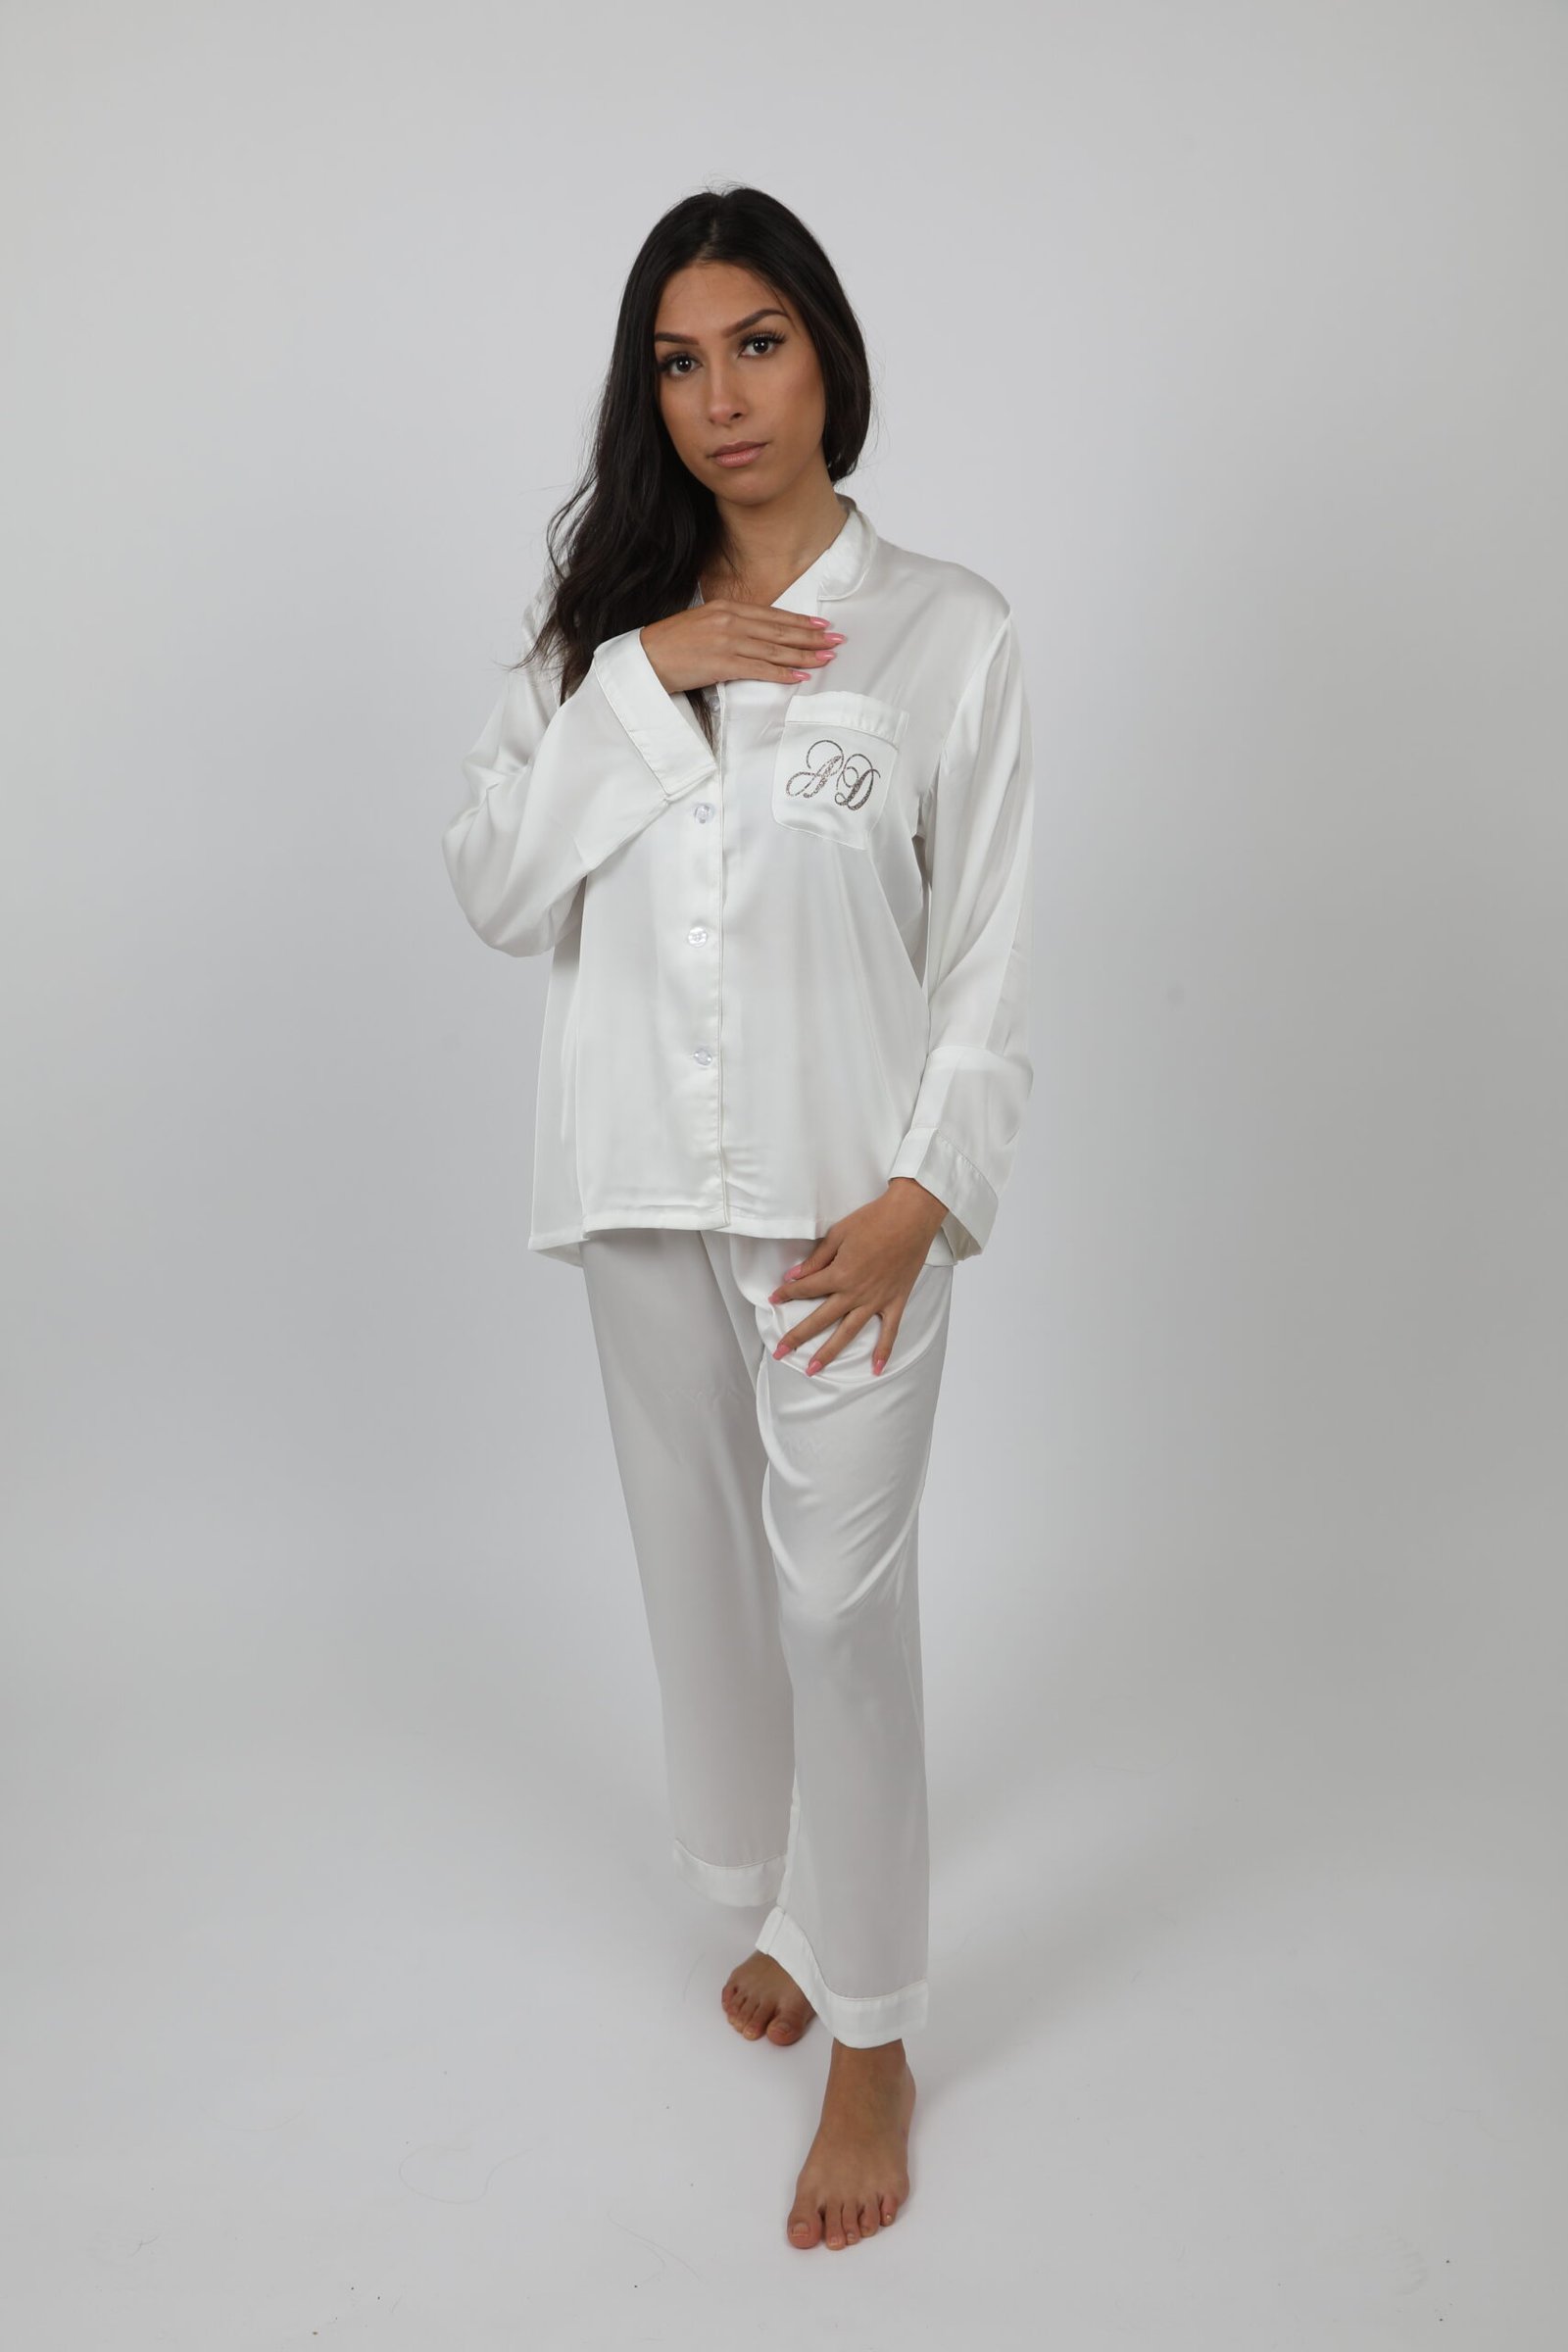 Pyjama satin personnalisé femme - Homedress - 49€